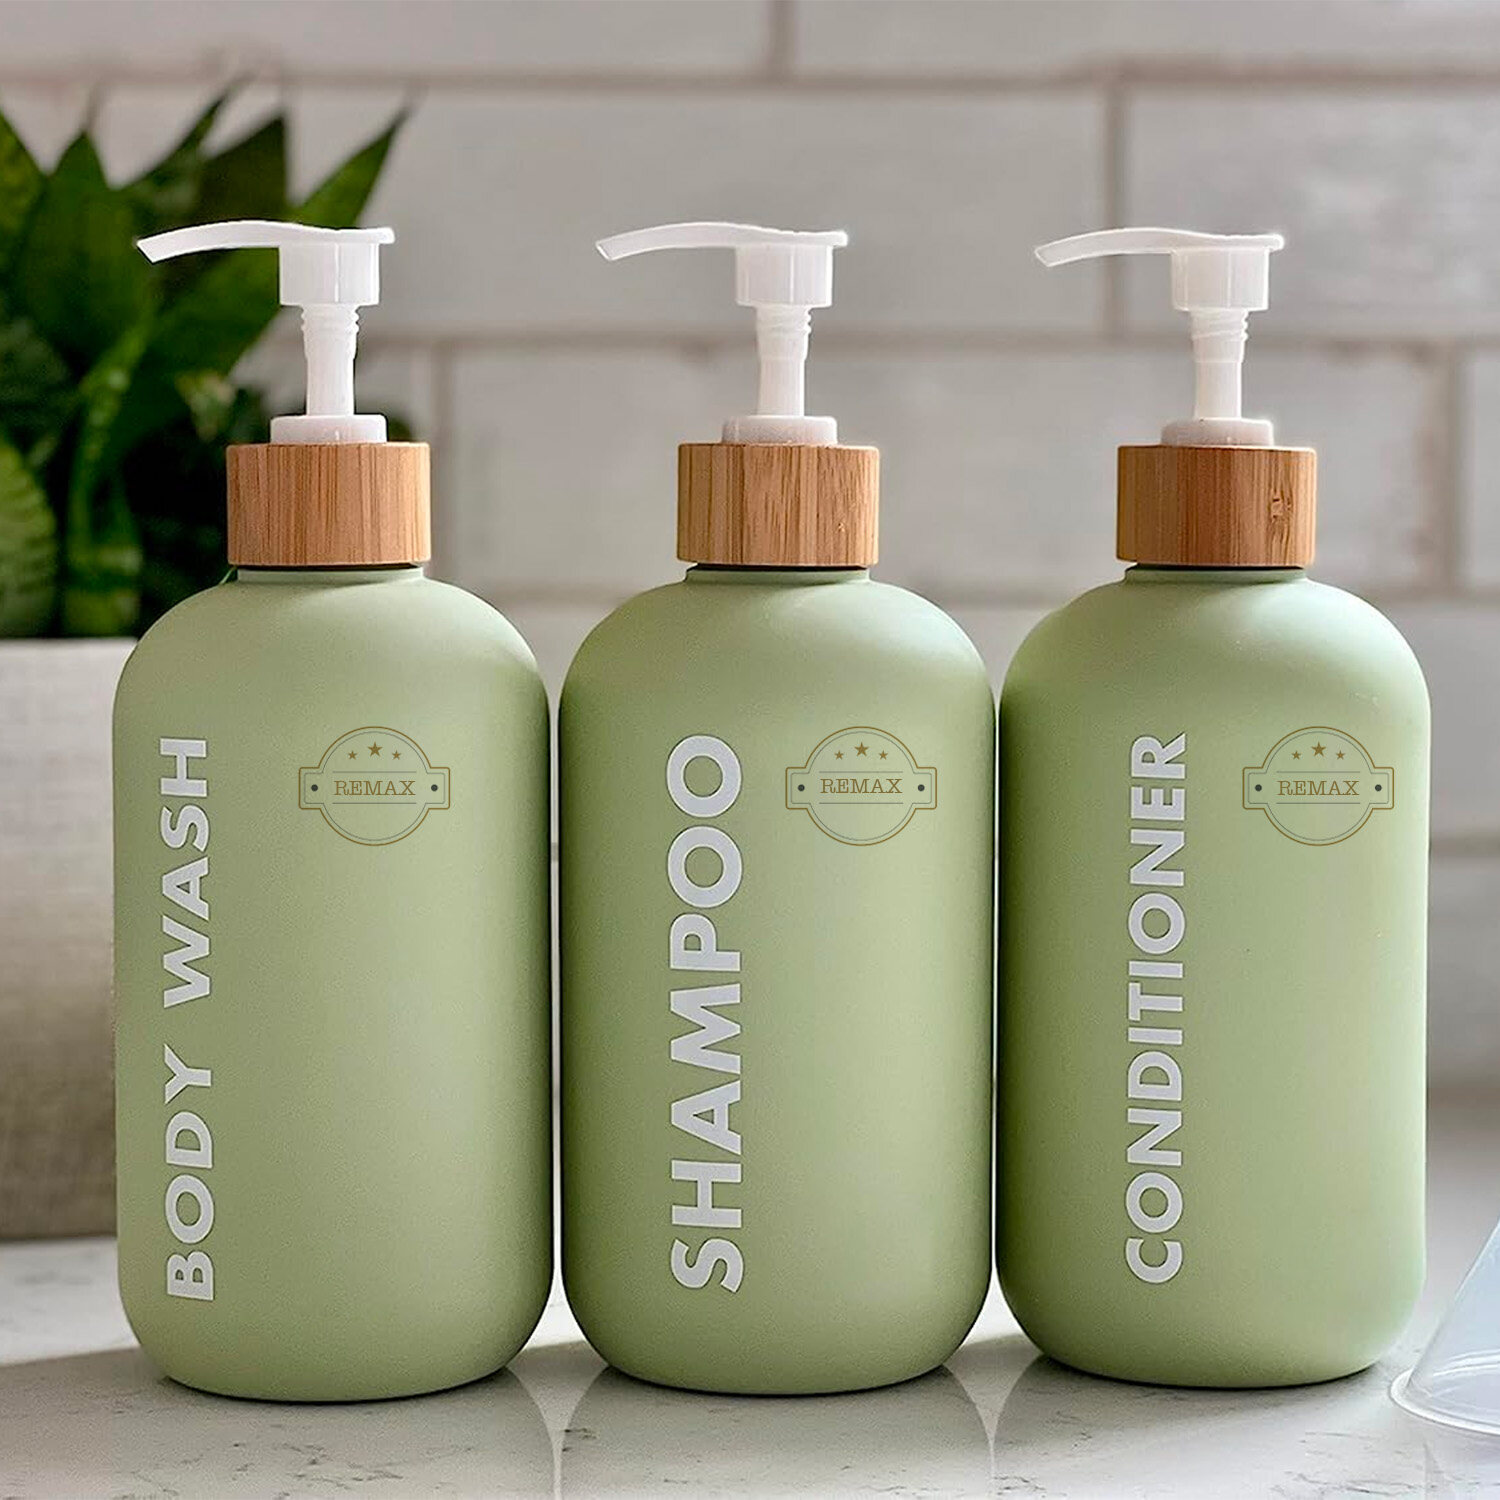 free samples eco- friendly screen Printing biodegradable straw wheat luxury toner cream lotion shampoo bottles